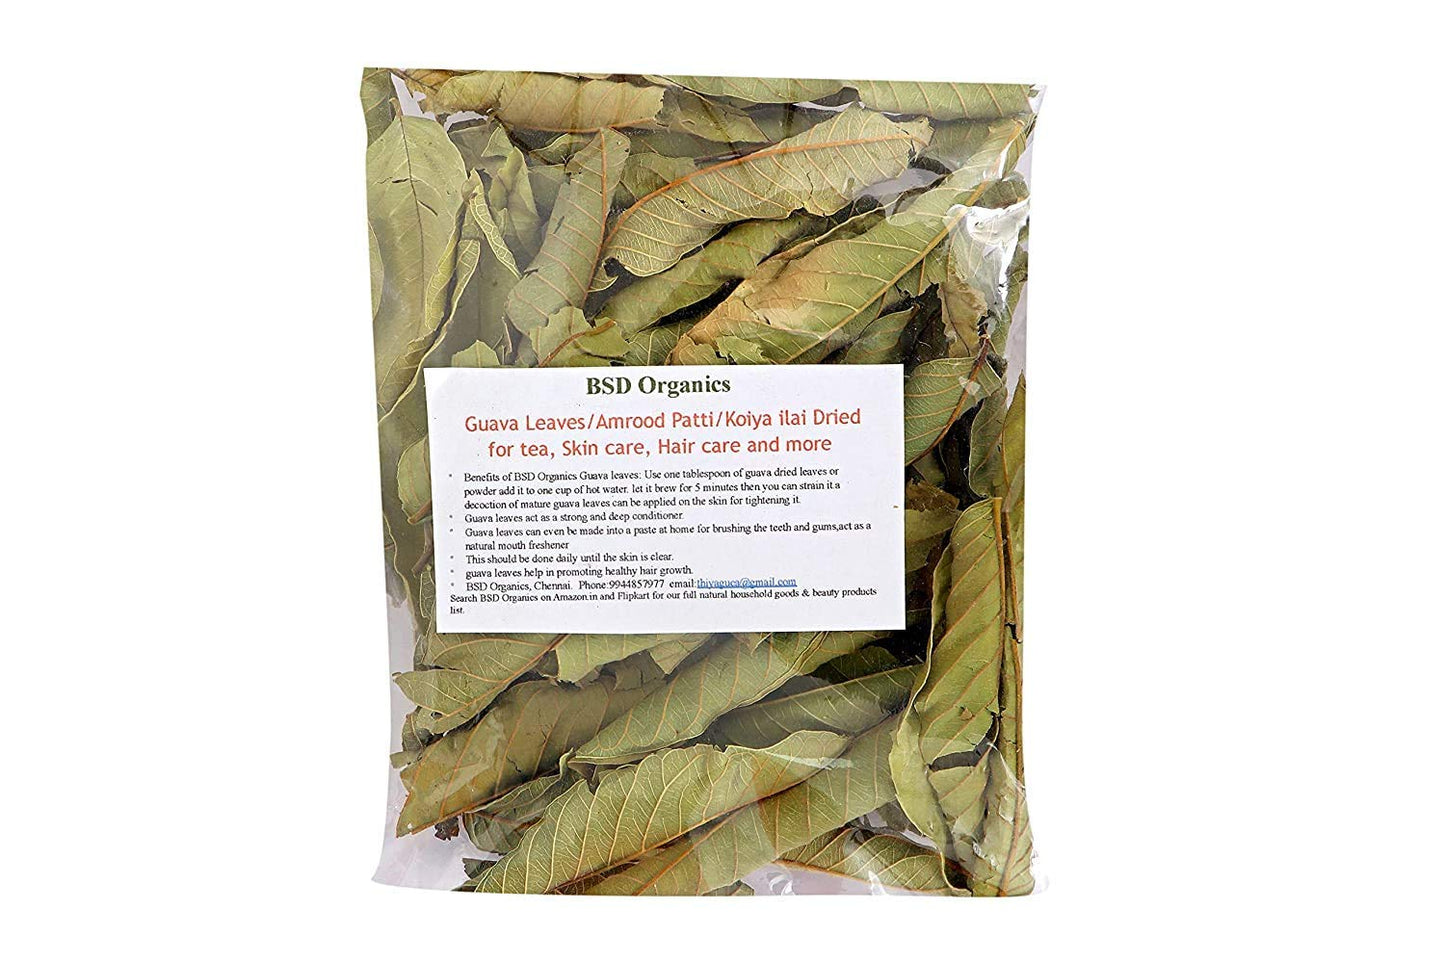 Guava Leaves / Amrood Patti / Koiya ilai Dried for tea and more - 200 Gm / 7.05 Oz